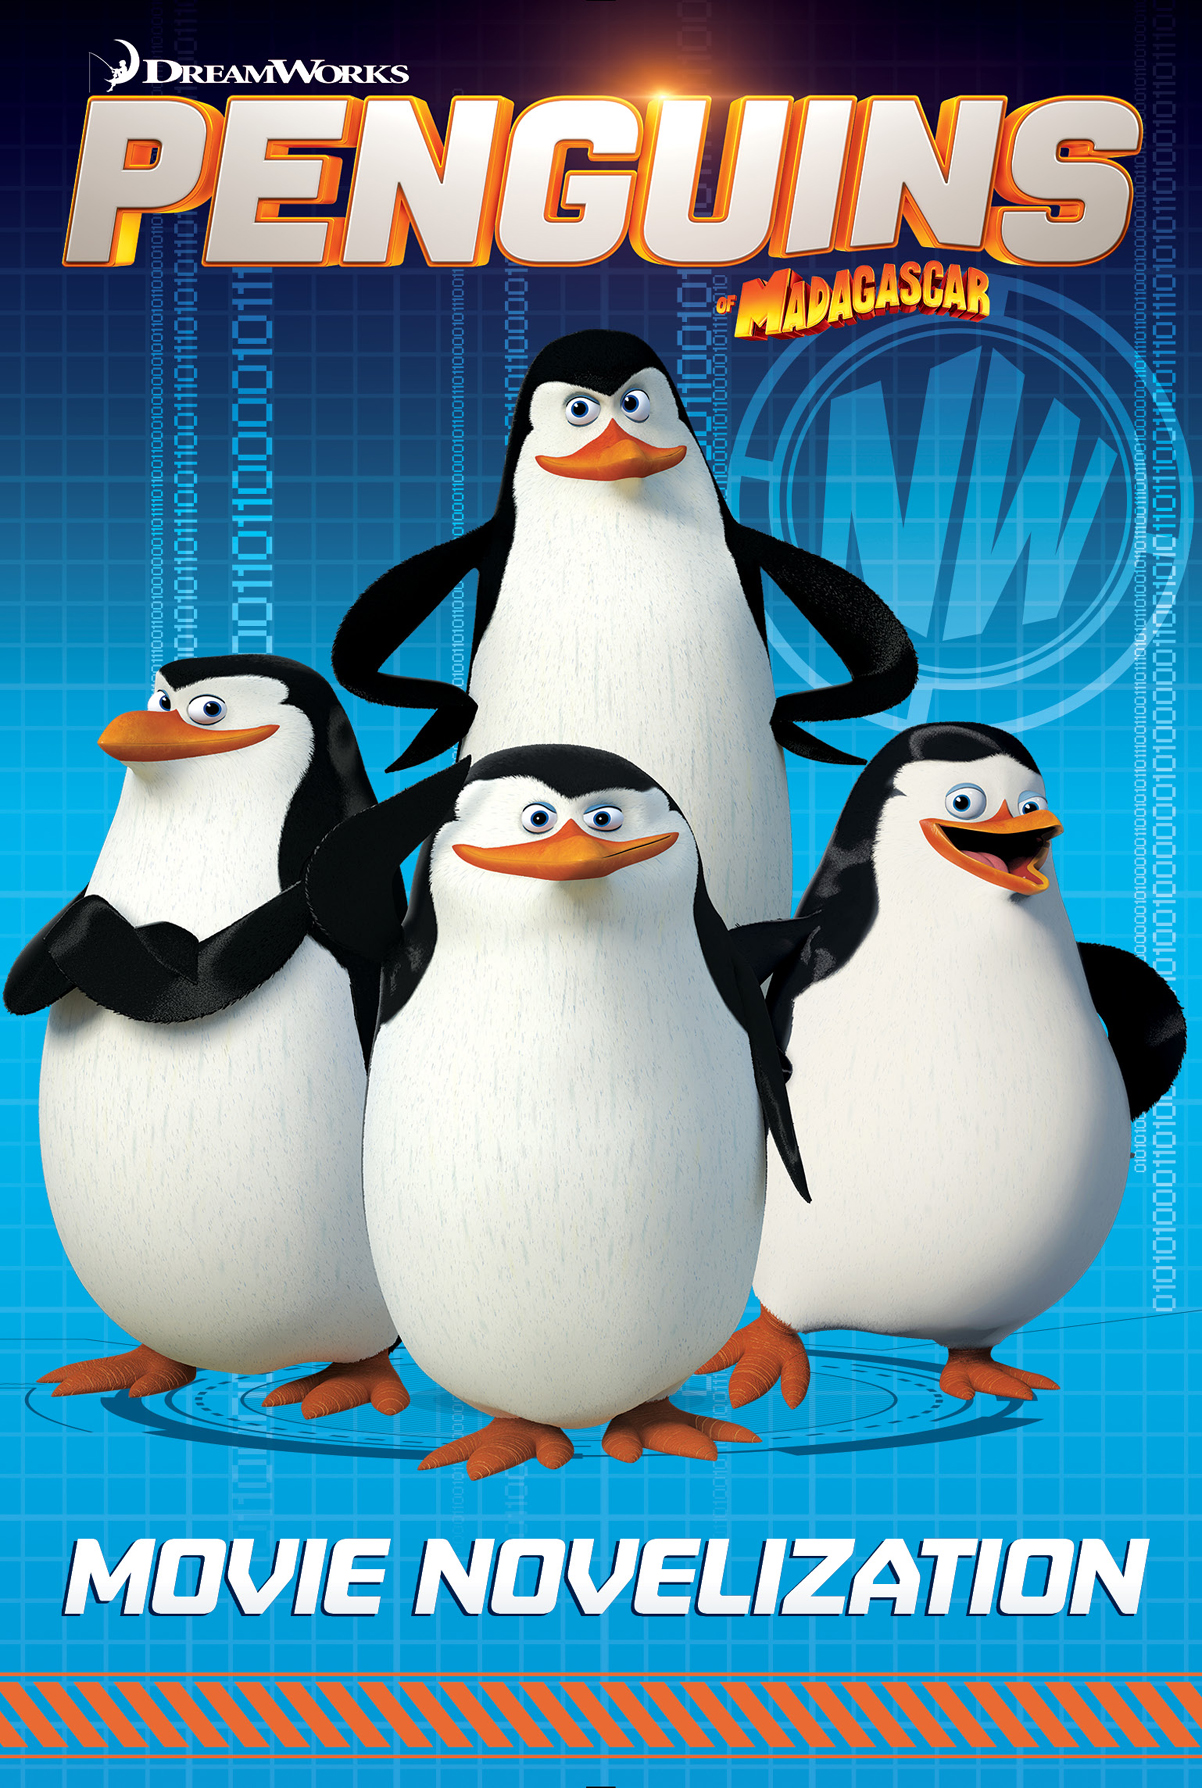 Penguins of Madagascar Movie Novelization by Tracey West